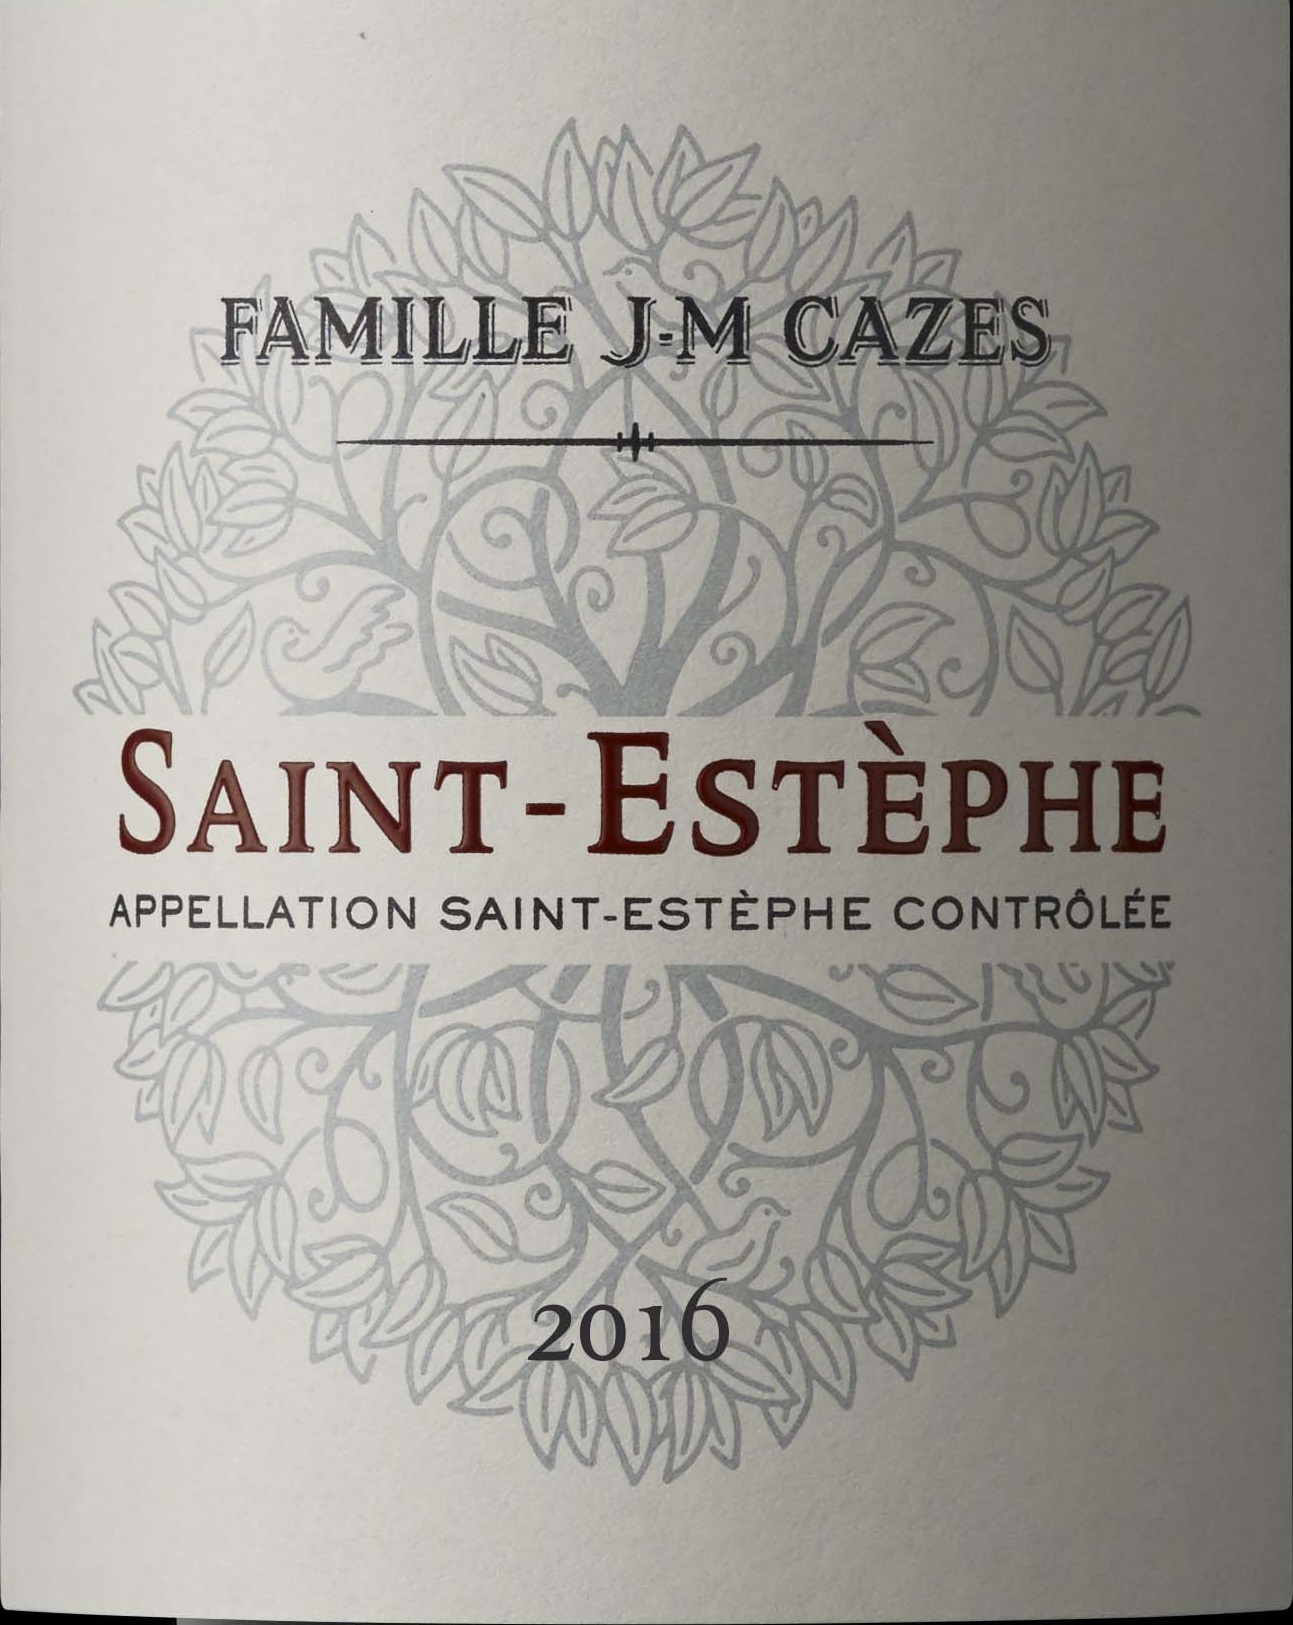 J-M Cazes Saint-Estephe 2015